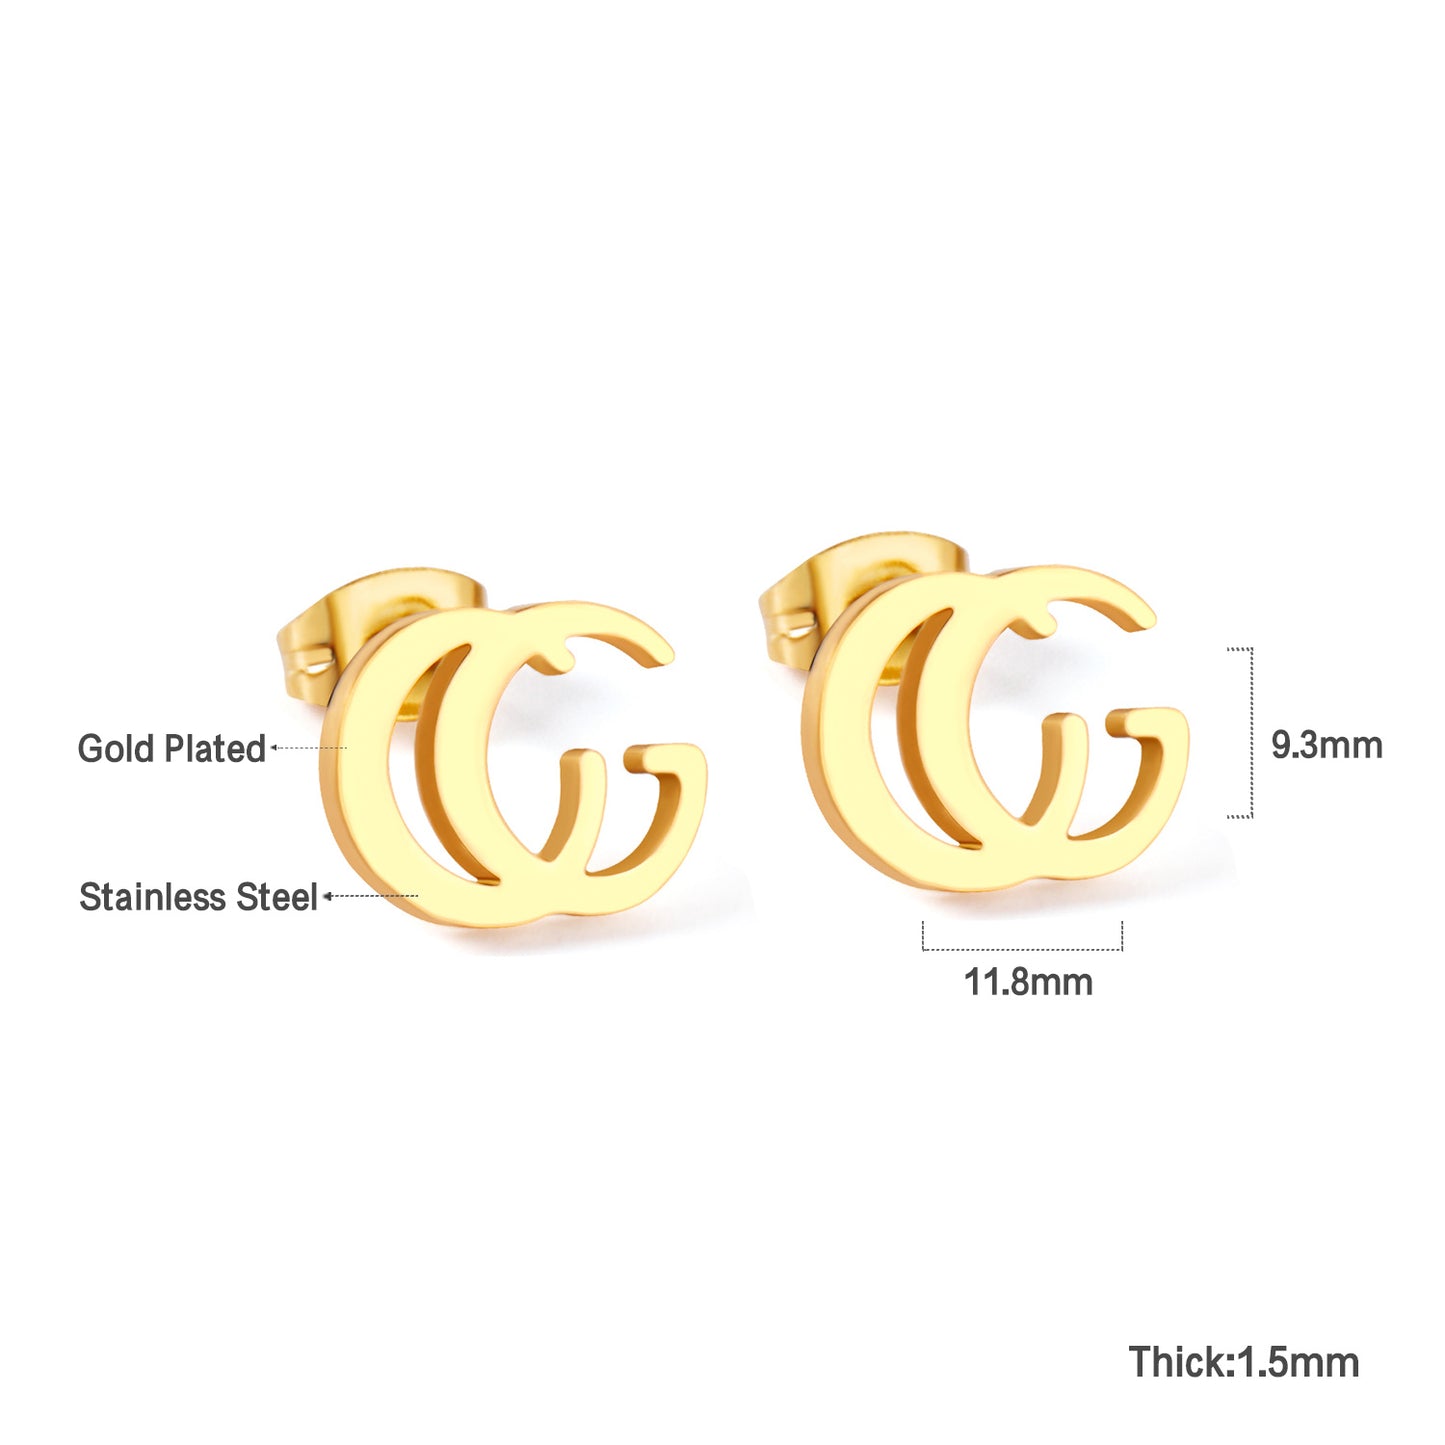 Gg 18k gold plated stud earring